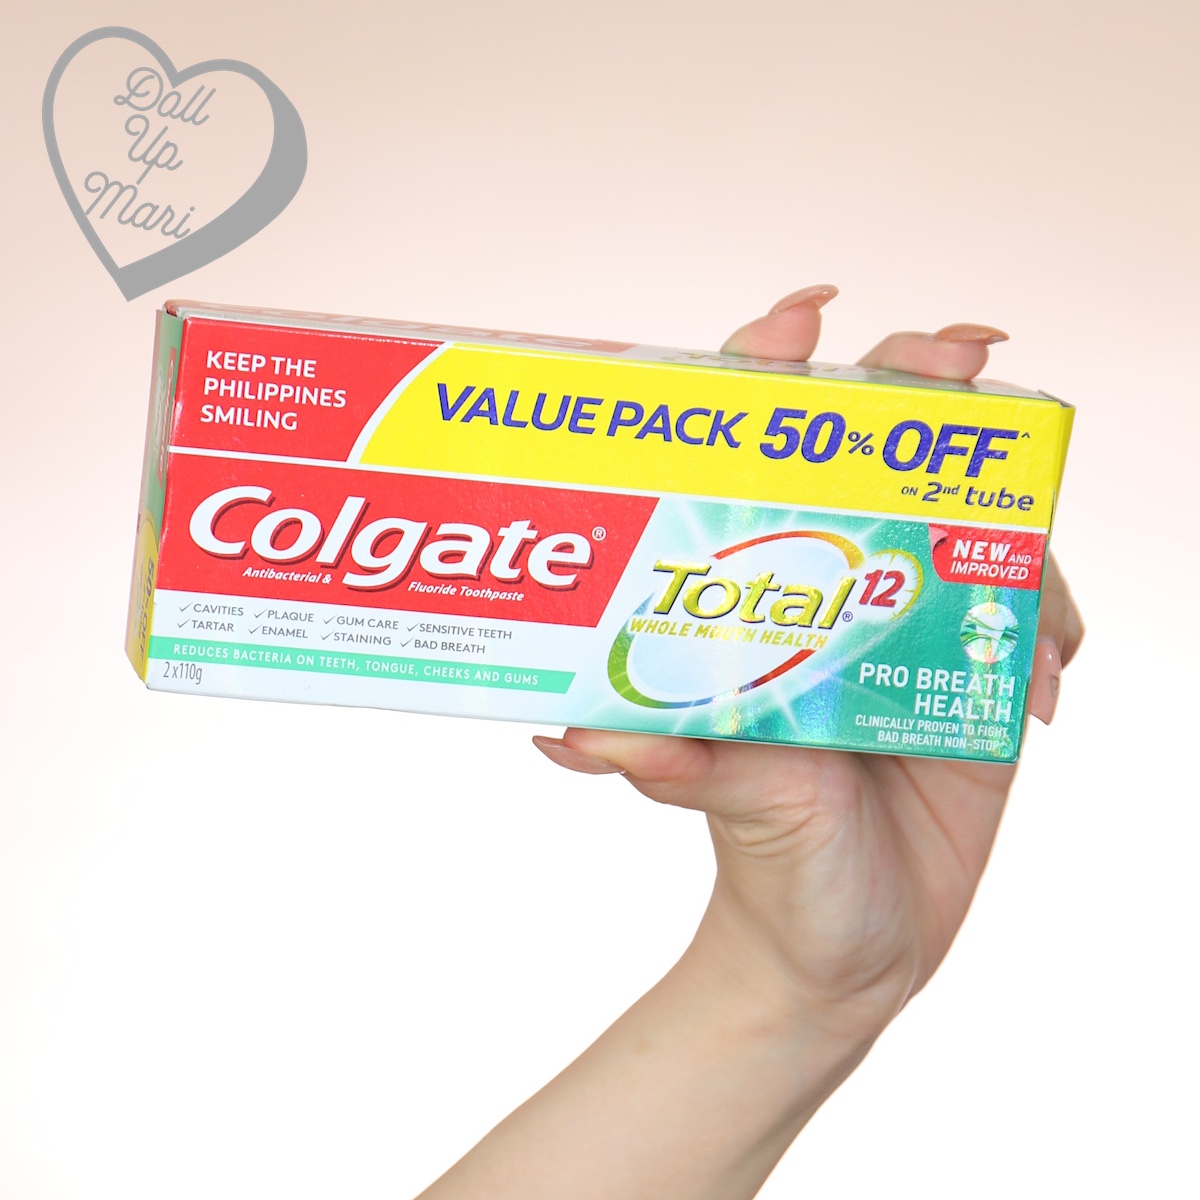 Colgate Total 12 Pro Breath Health Toothpaste